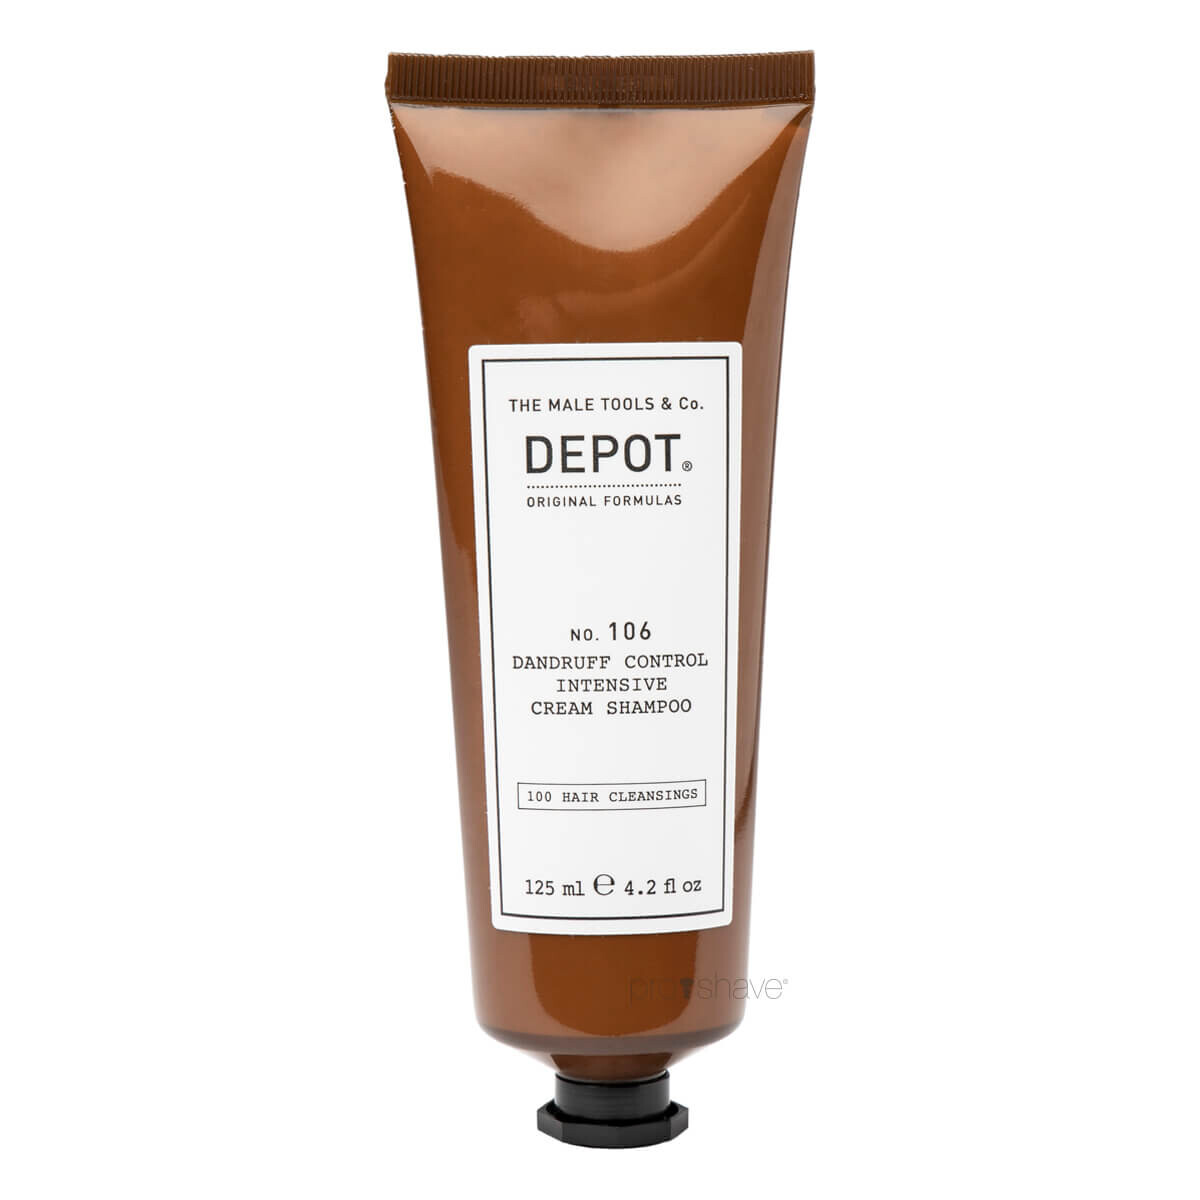 16: Depot Dandruff Control Intensiv Shampoo, No. 106, 125 ml.